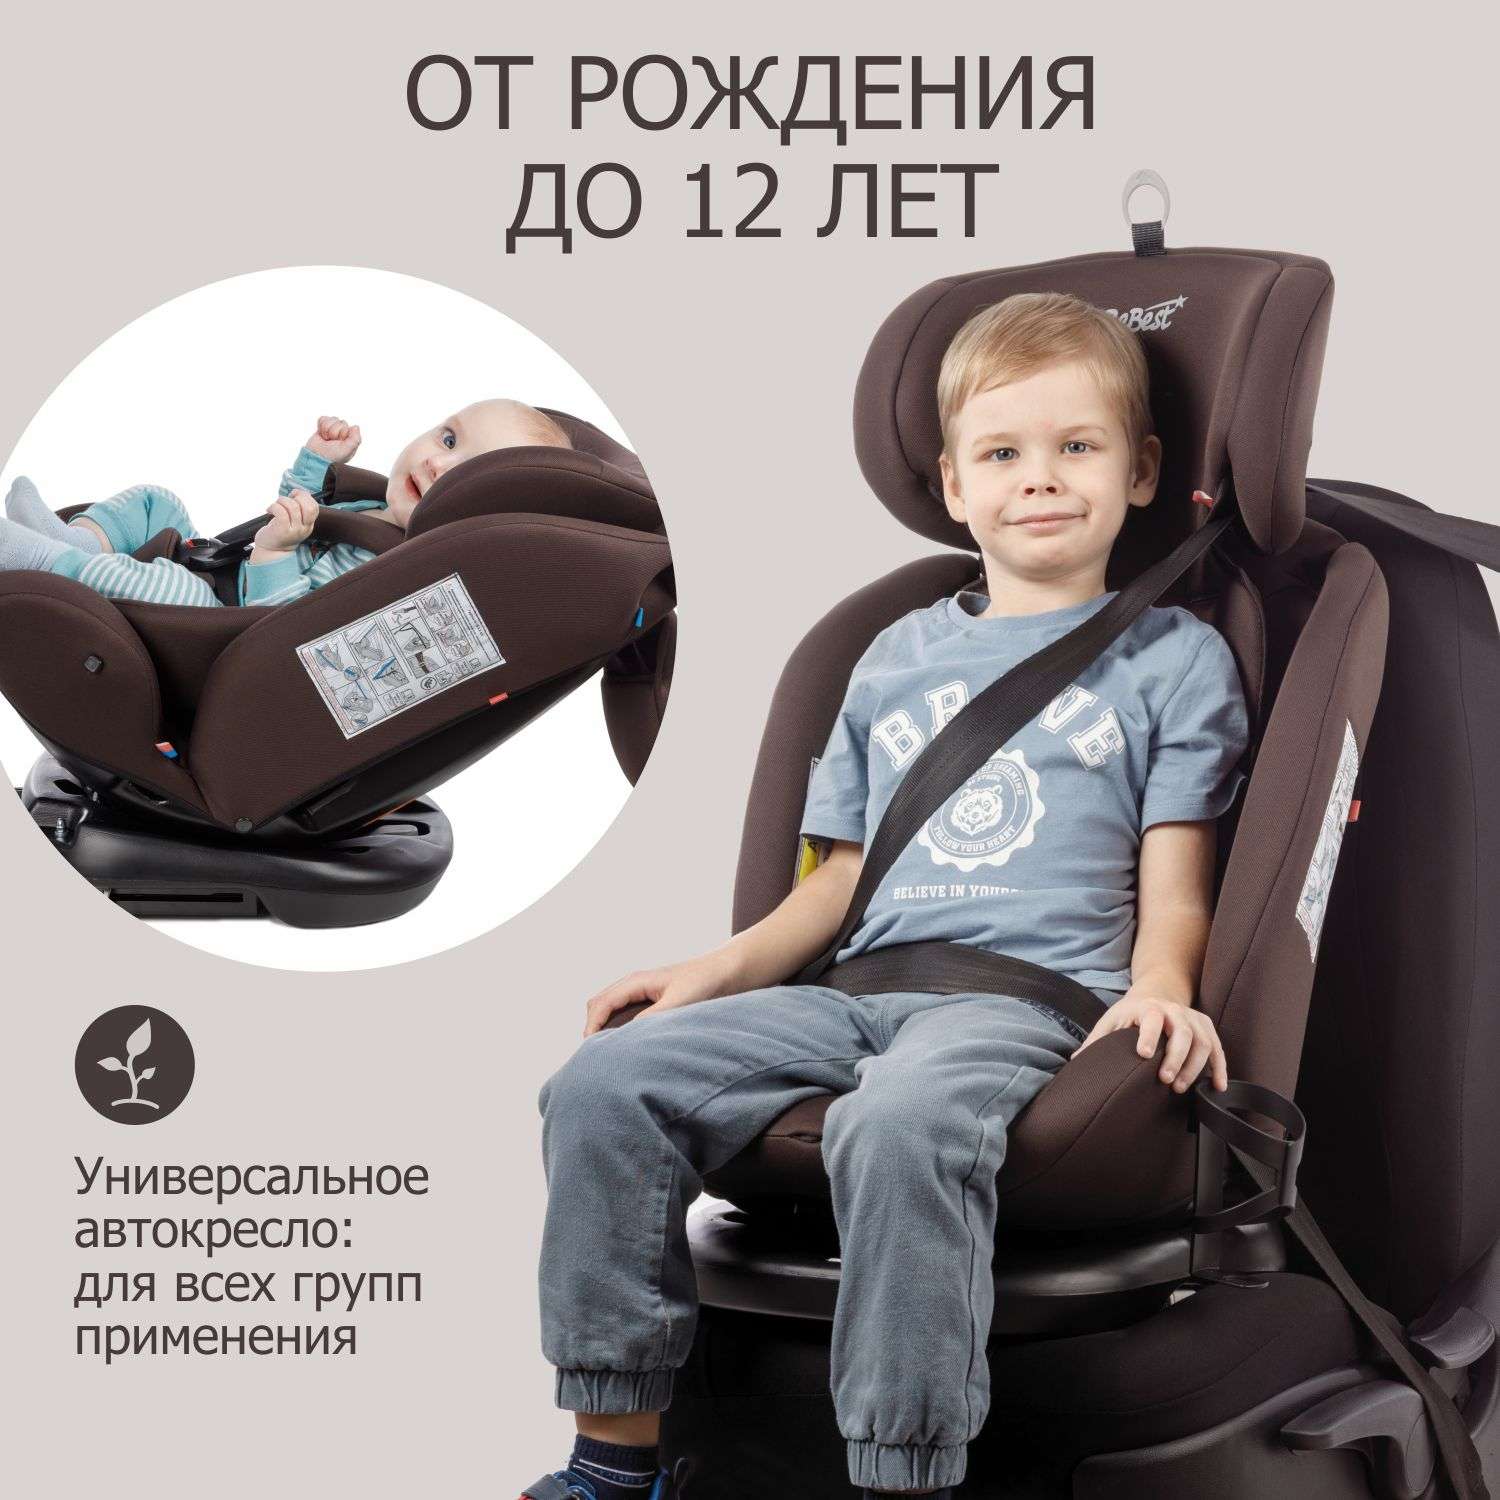 Автокресло детское поворотное BeBest Carrier Isofix Lux гот 0 до 36 кг brown - фото 3